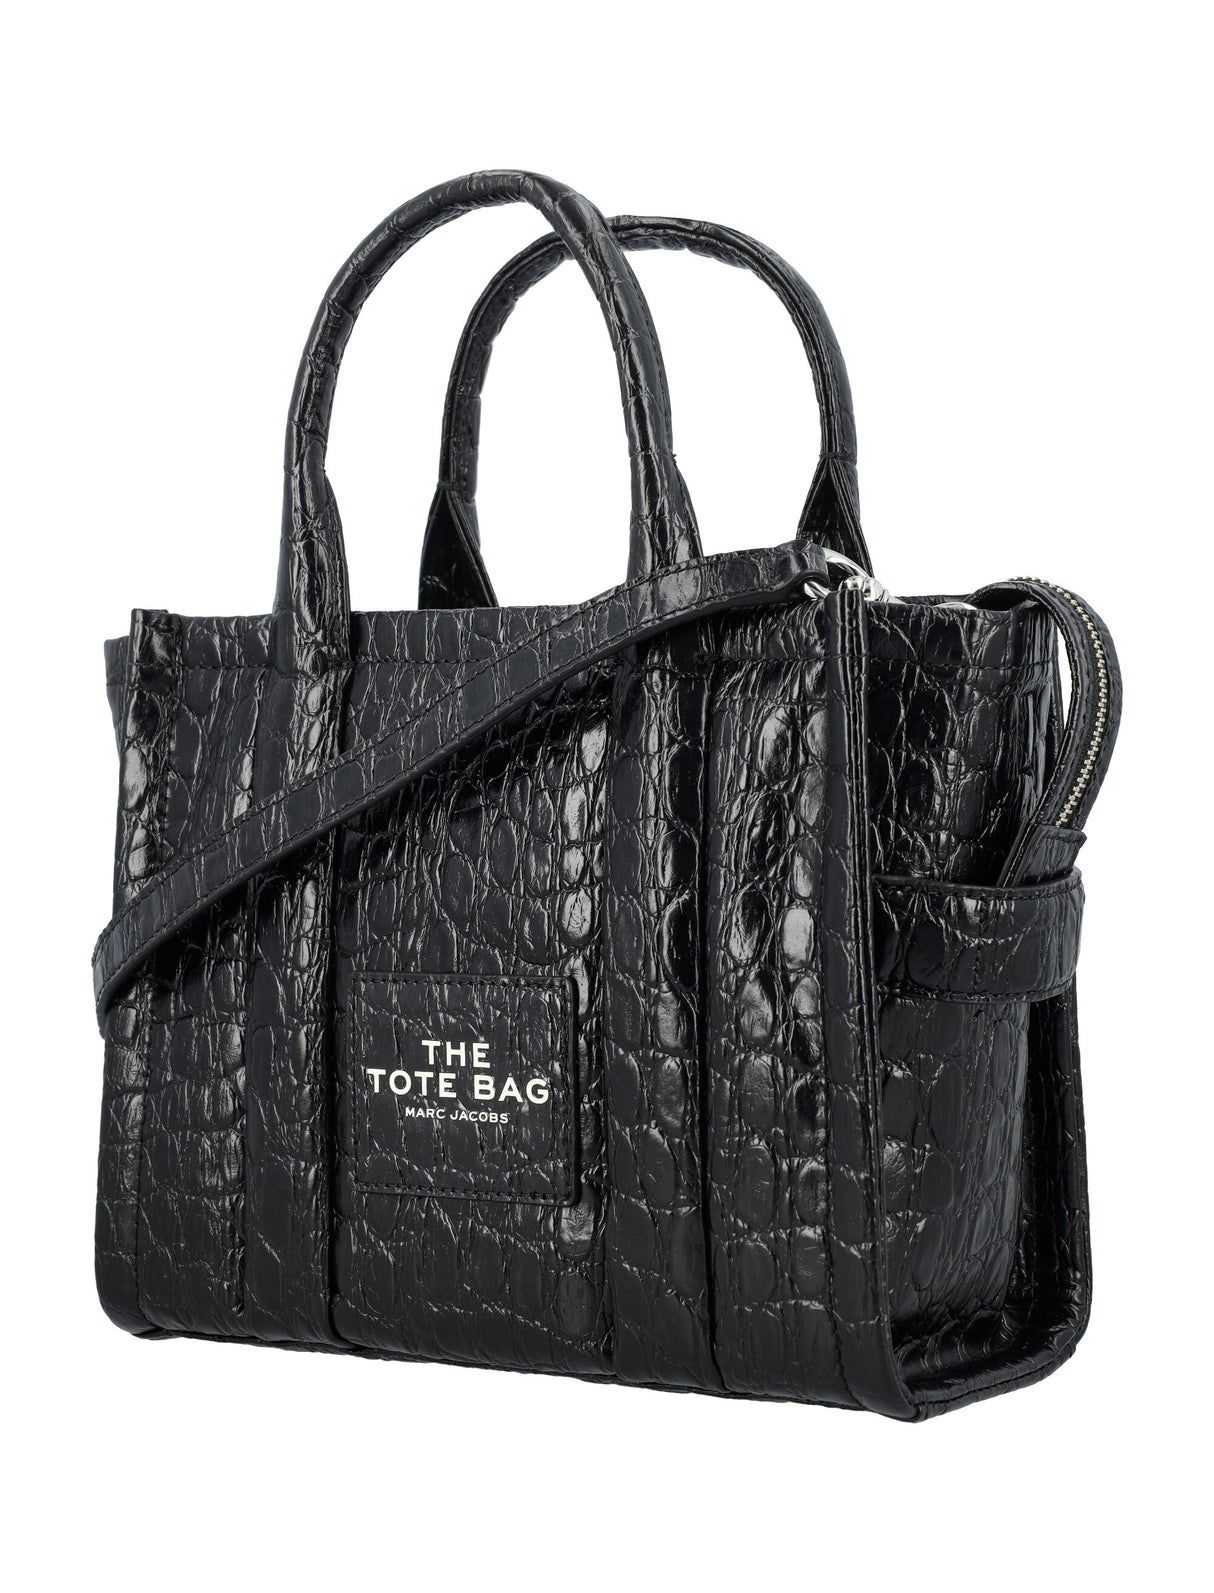 MARC JACOBS Black Croc-Embossed Mini Tote Handbag with Adjustable Strap